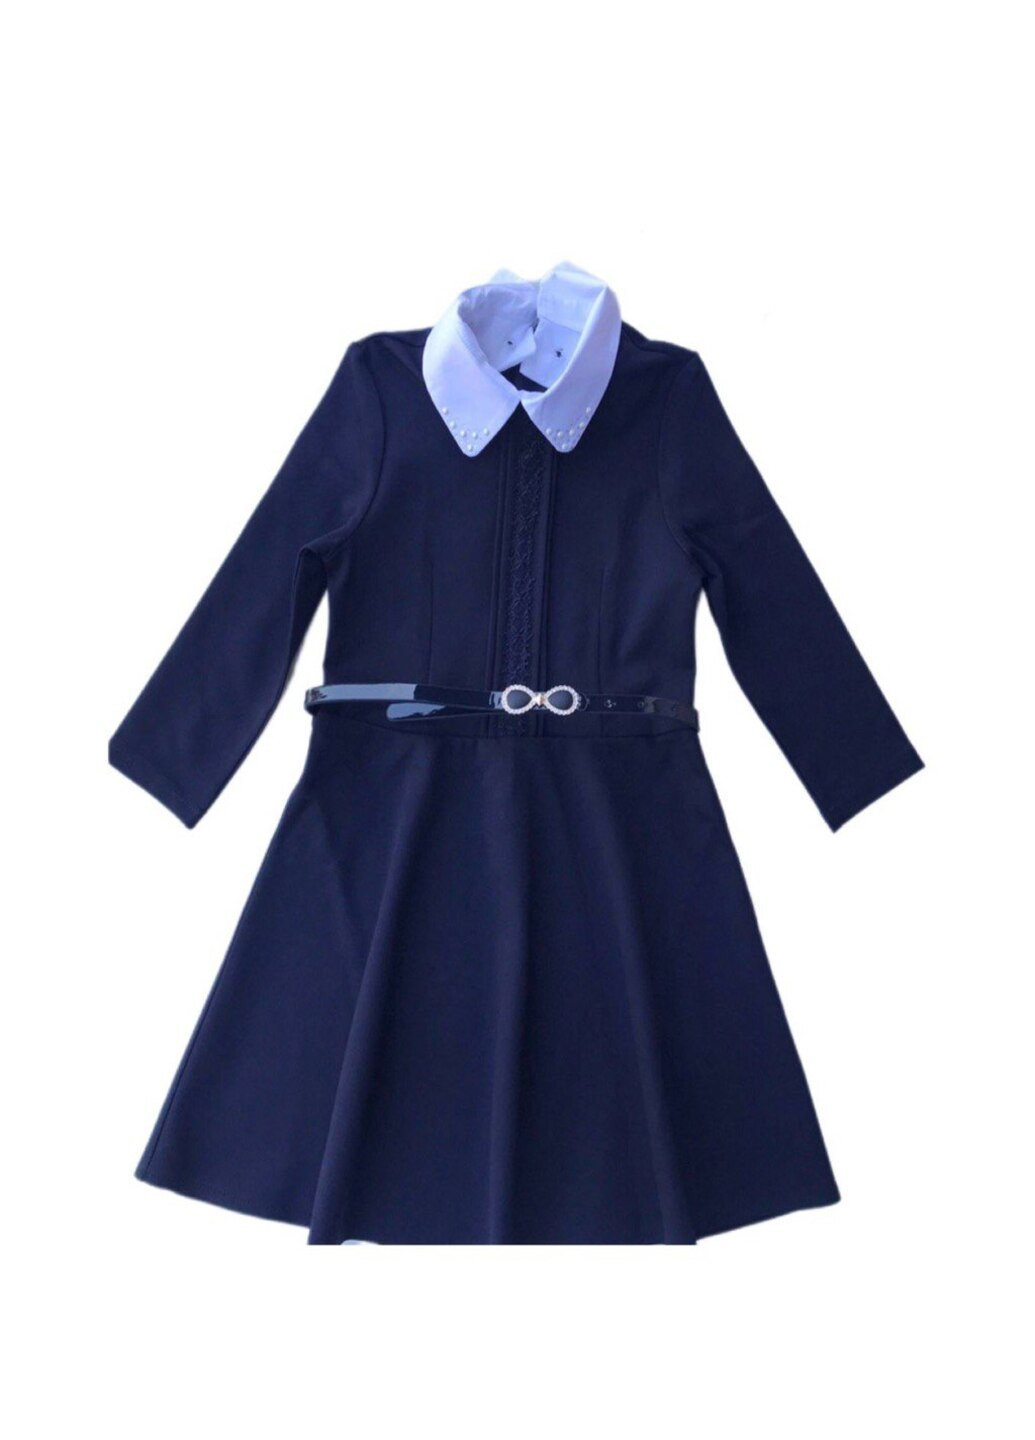 Тёмно-синее платье с воротником на девочку Модняшки (260594715)